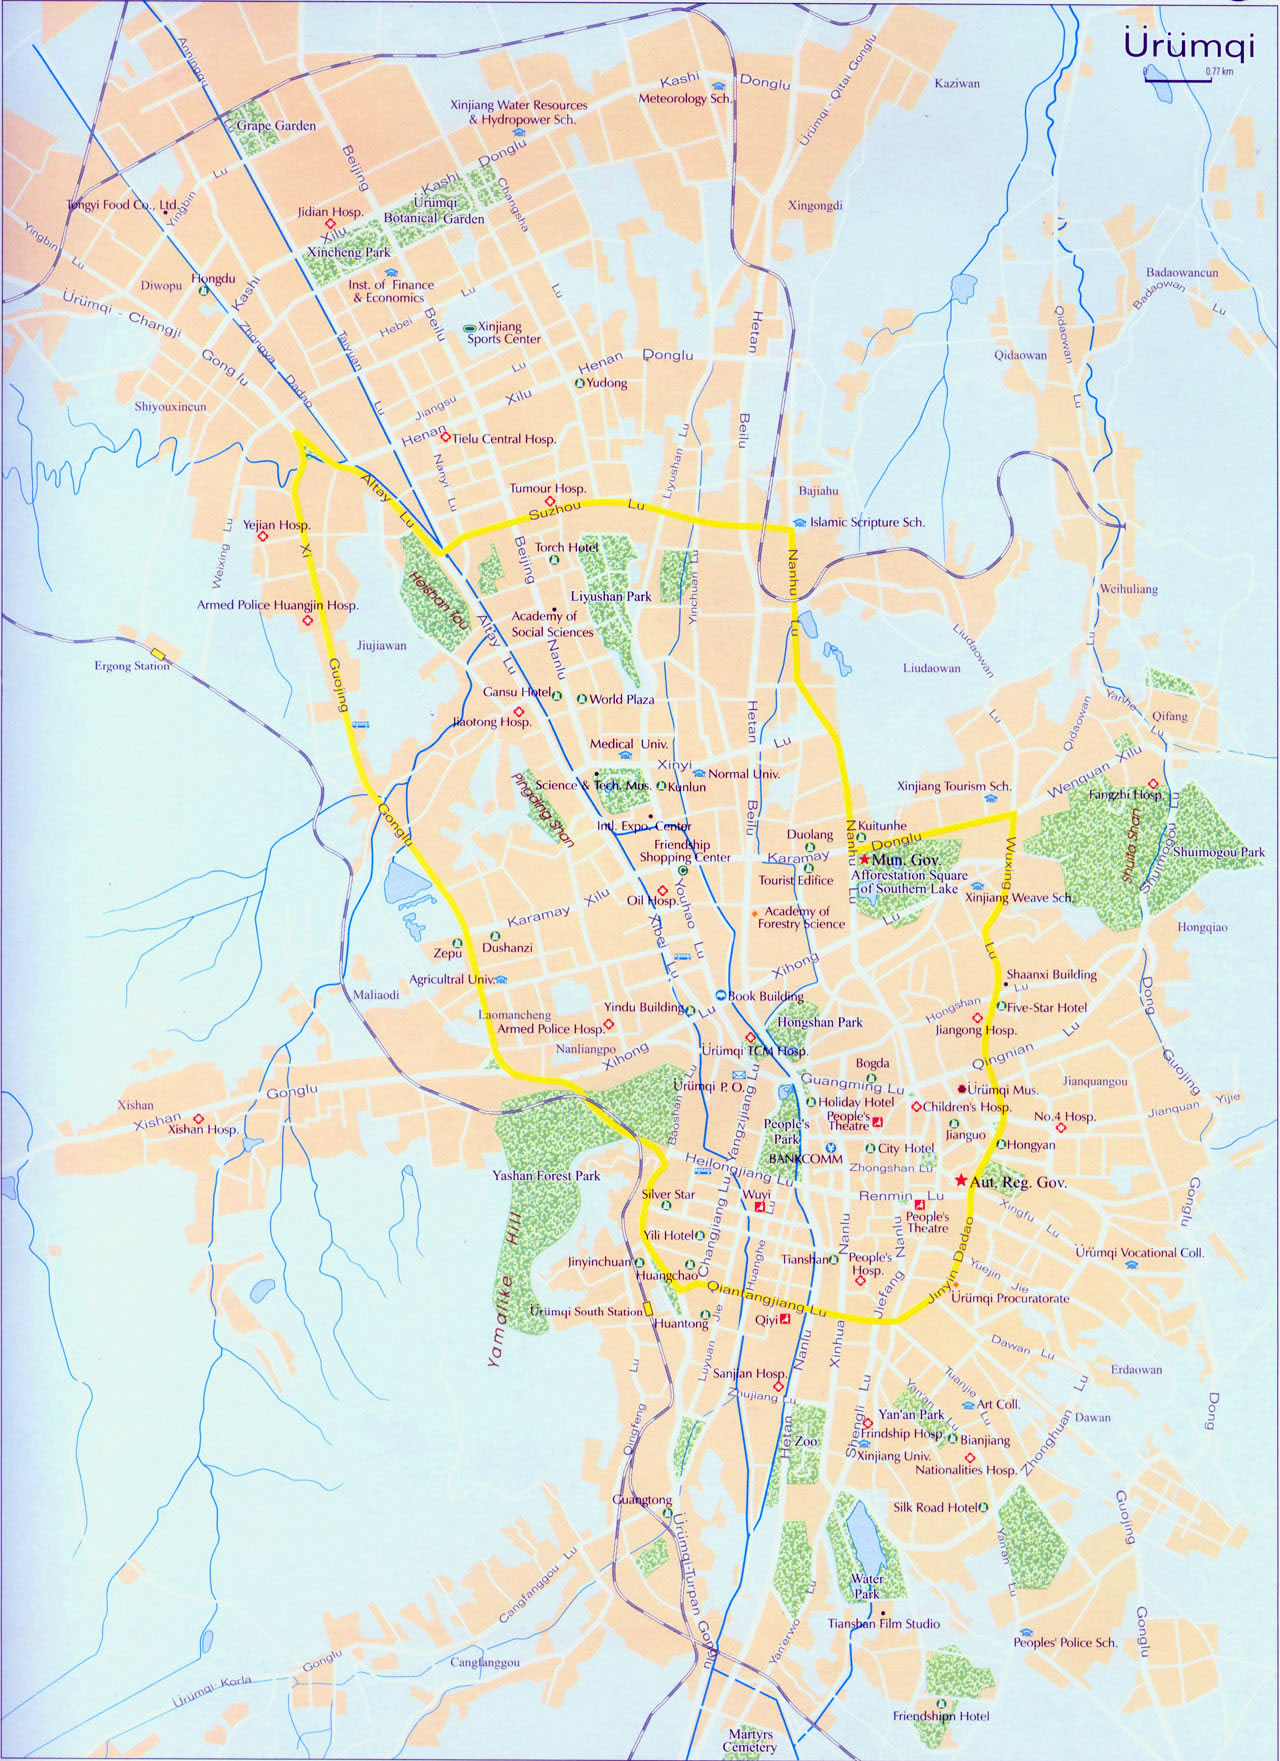 Urumqi city map